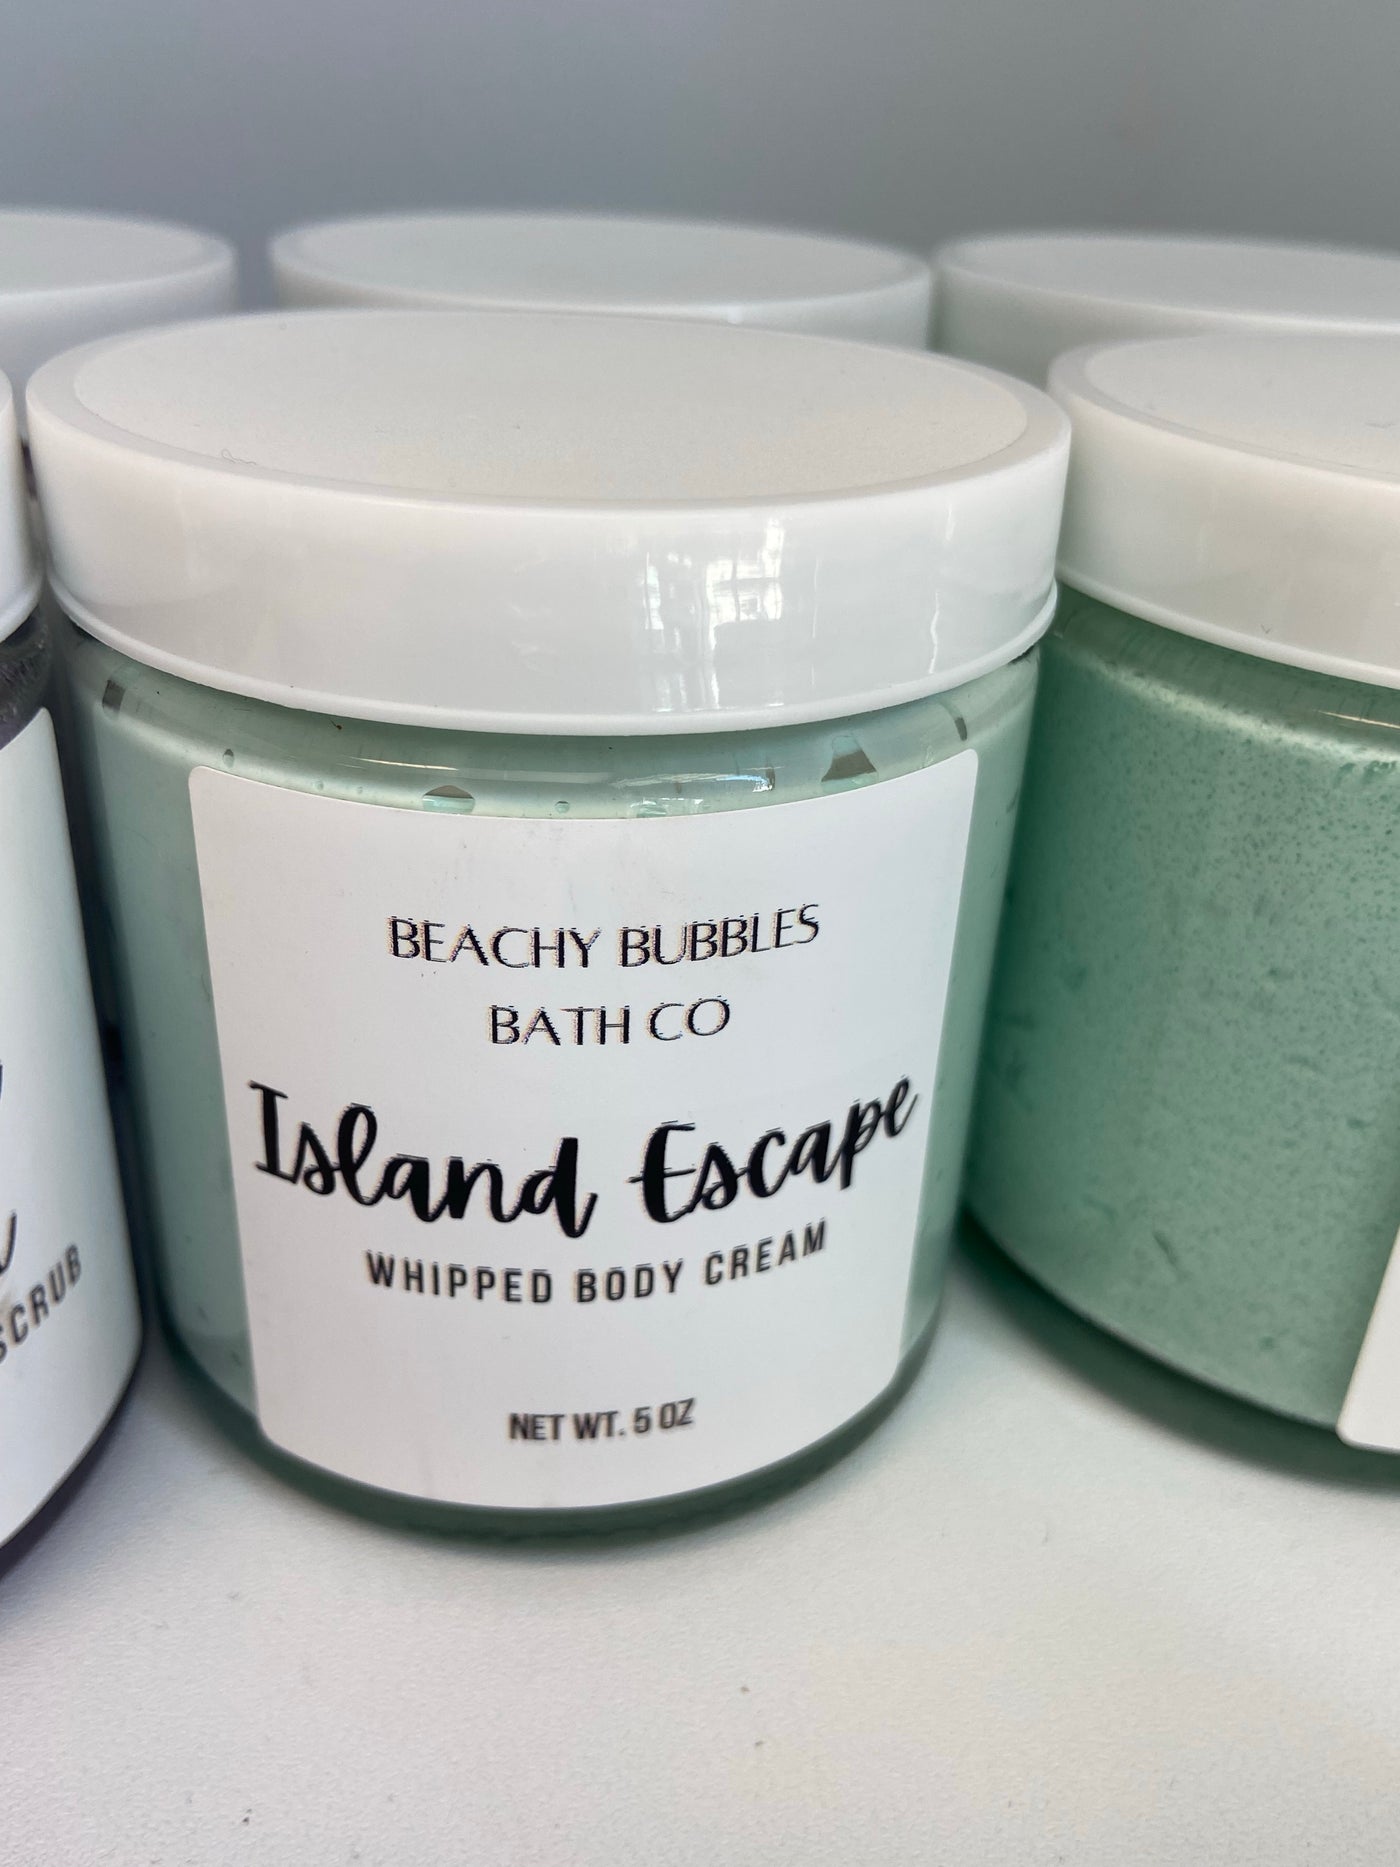 Beachy Bubbles Bath Co Whipped Body Cream